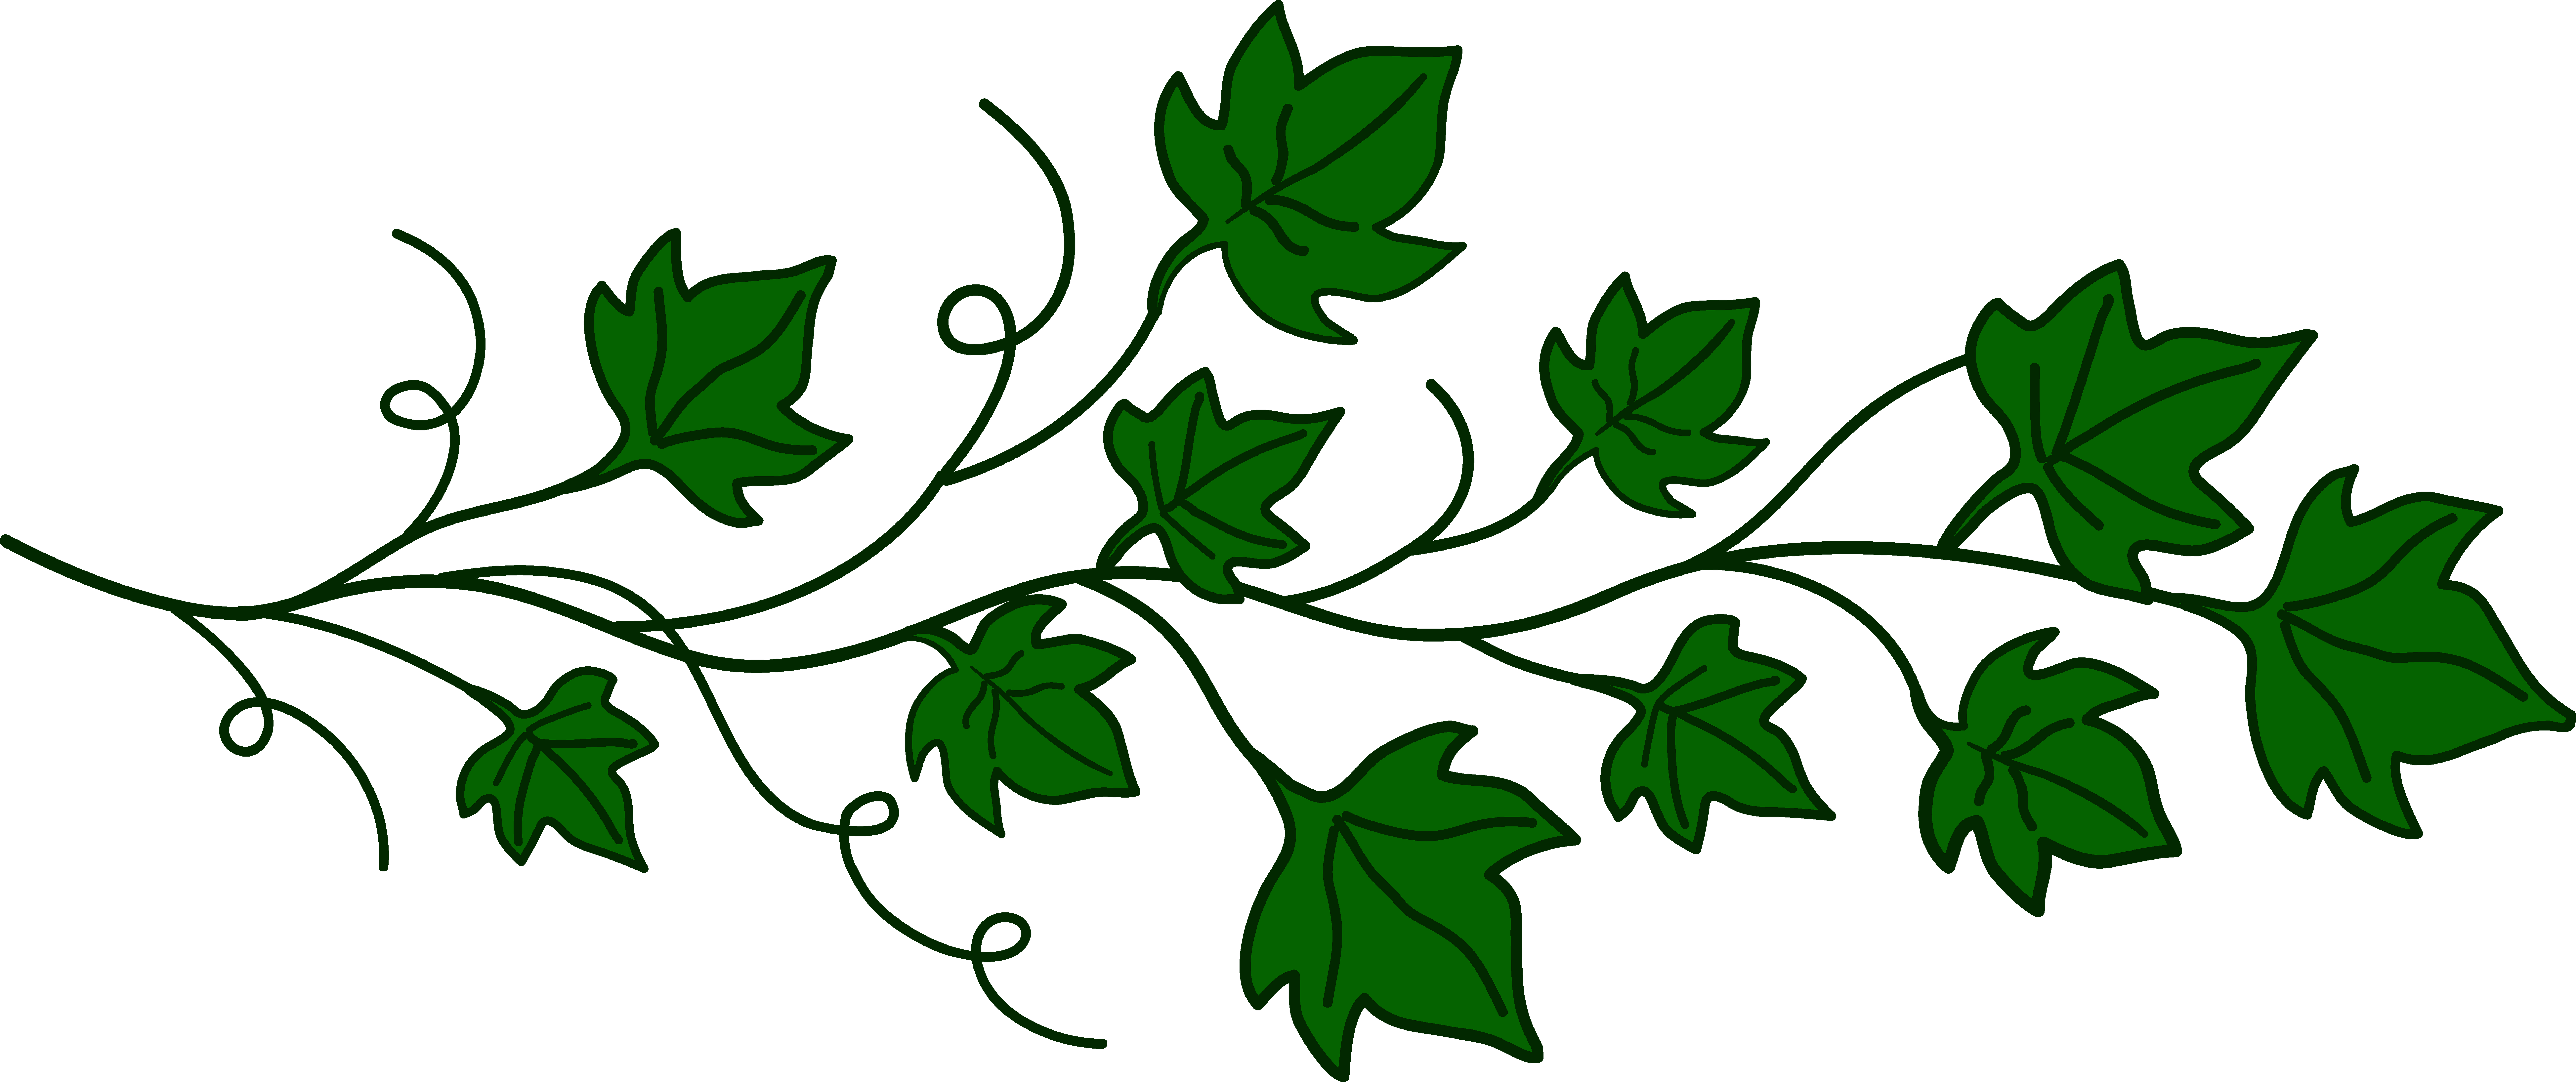 Green vine clip art at vector